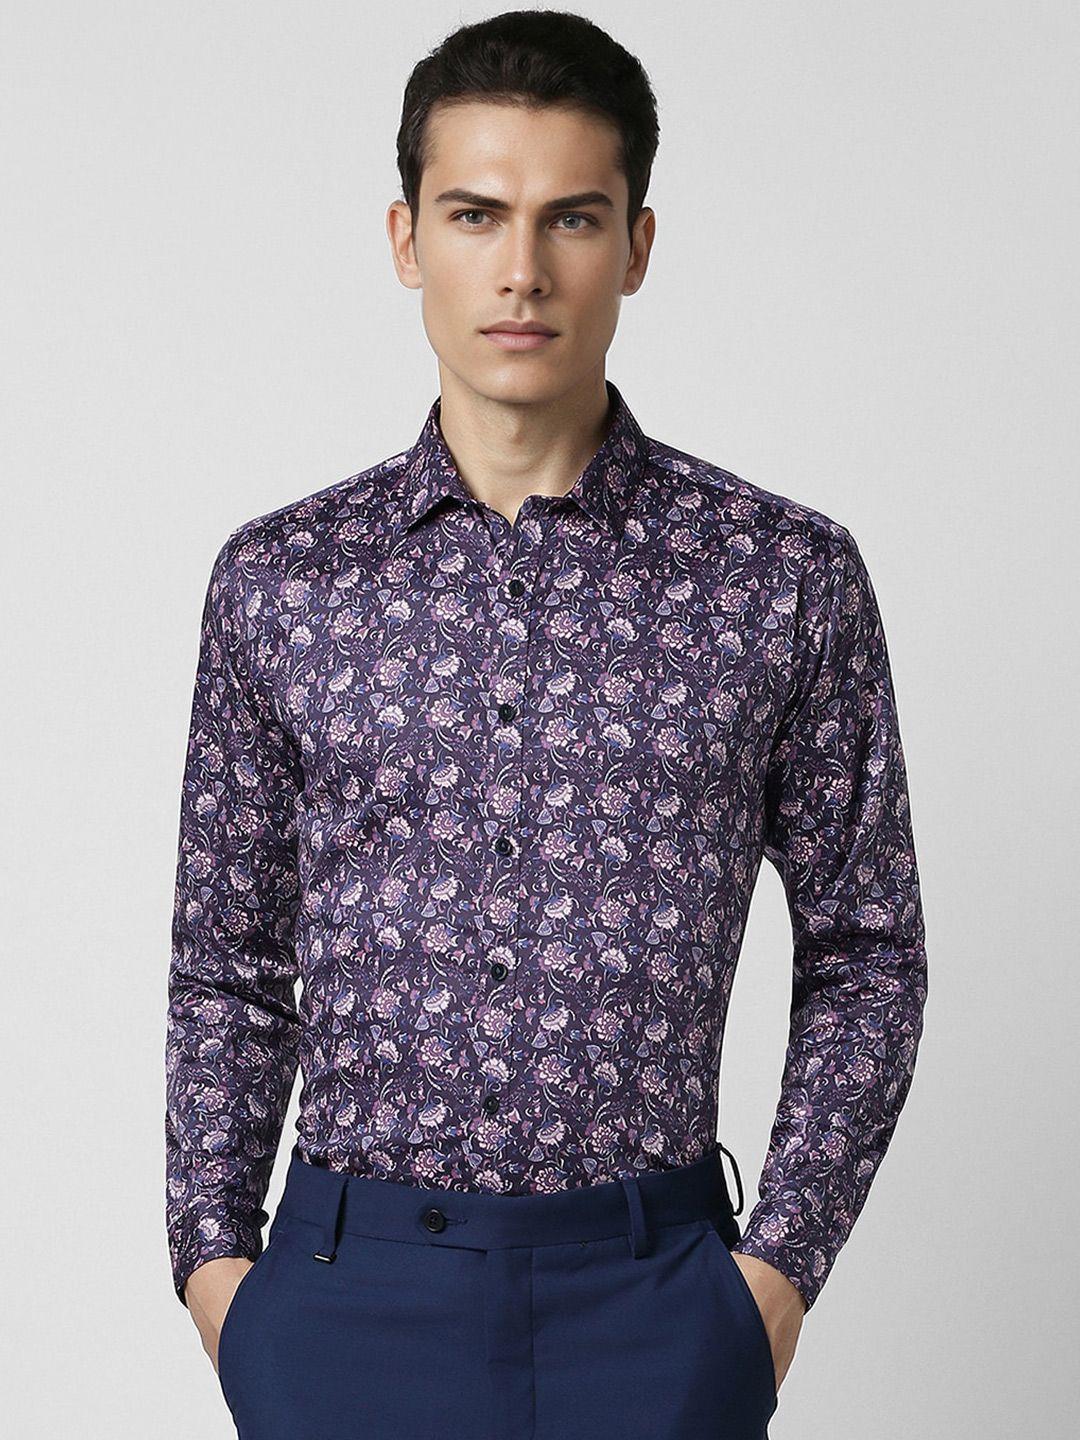 v dot men slim fit floral printed spread collar casual shirt